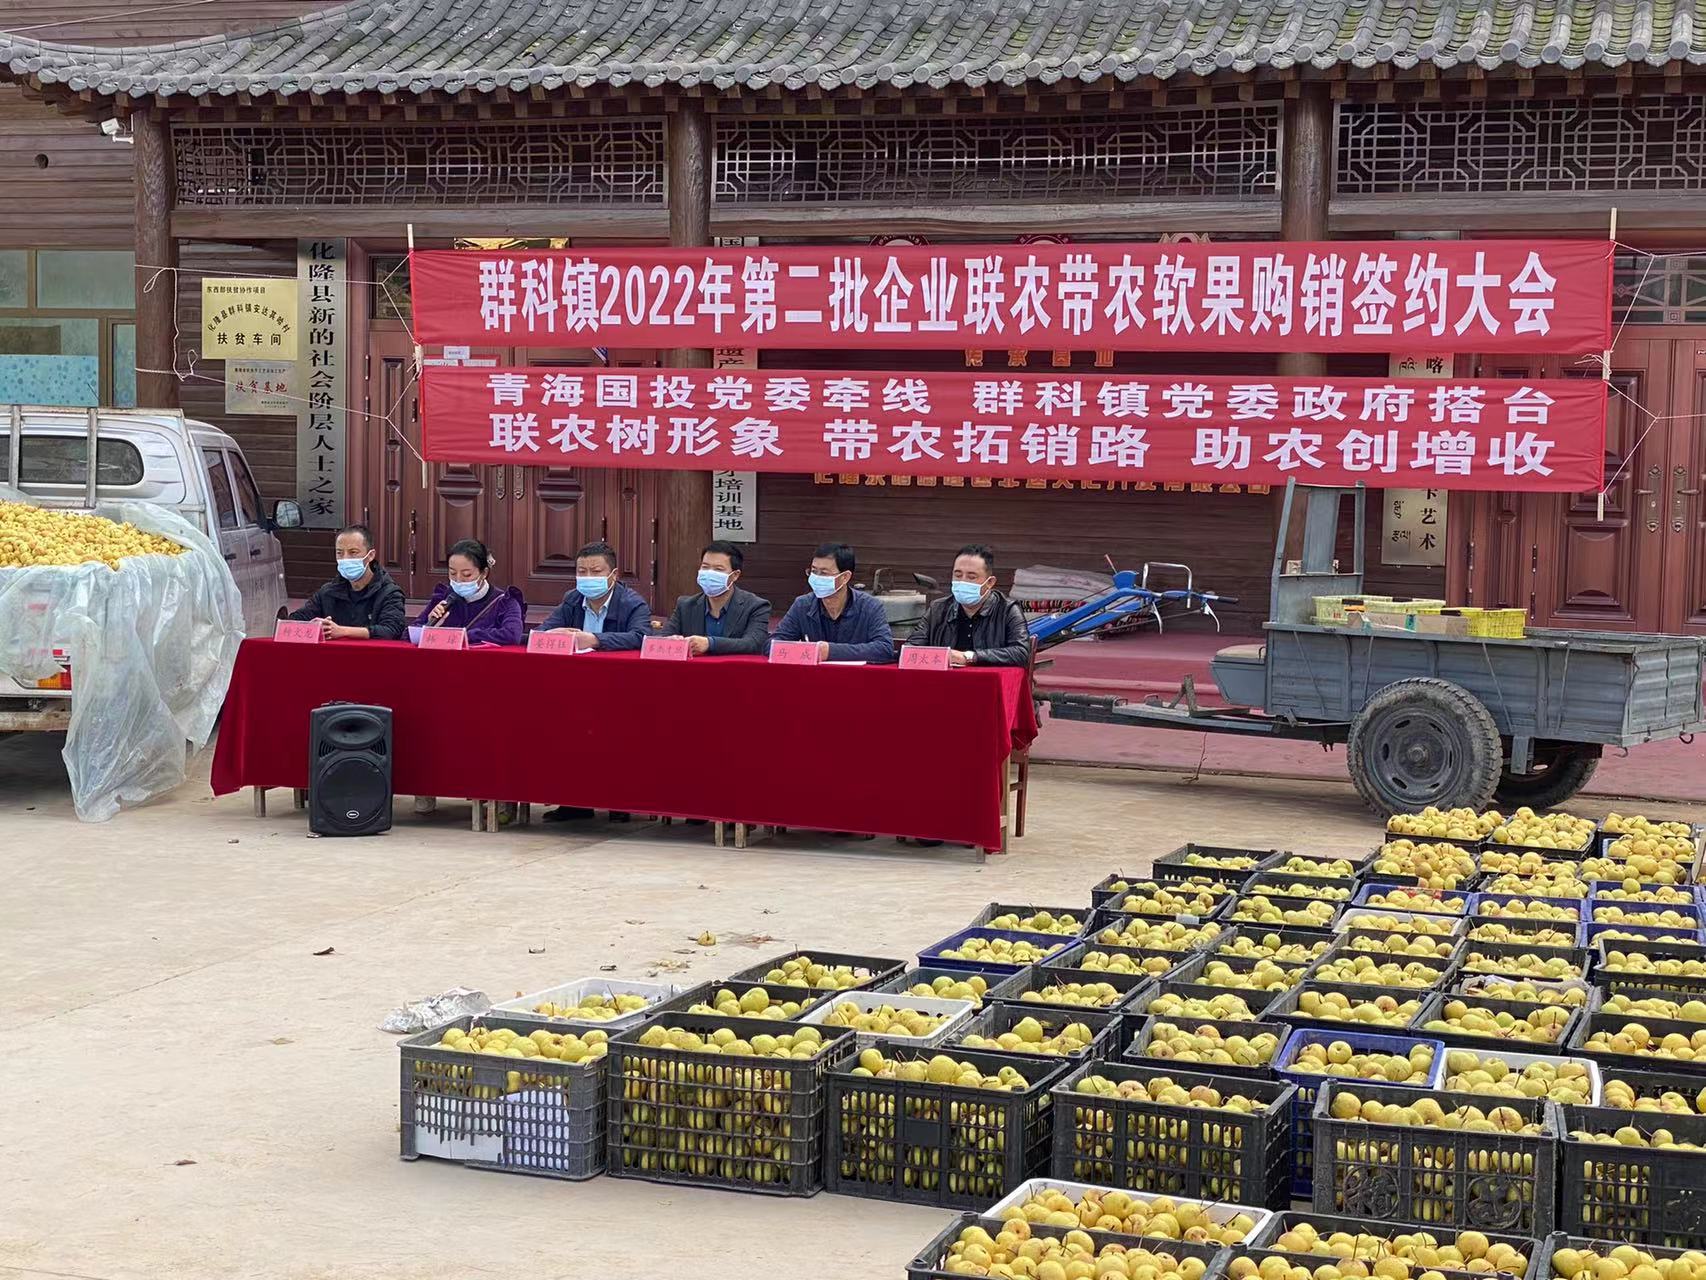 BG电子（中国）责任有限公司官网驻乙沙二村工作队积极帮助解决农产品滞销